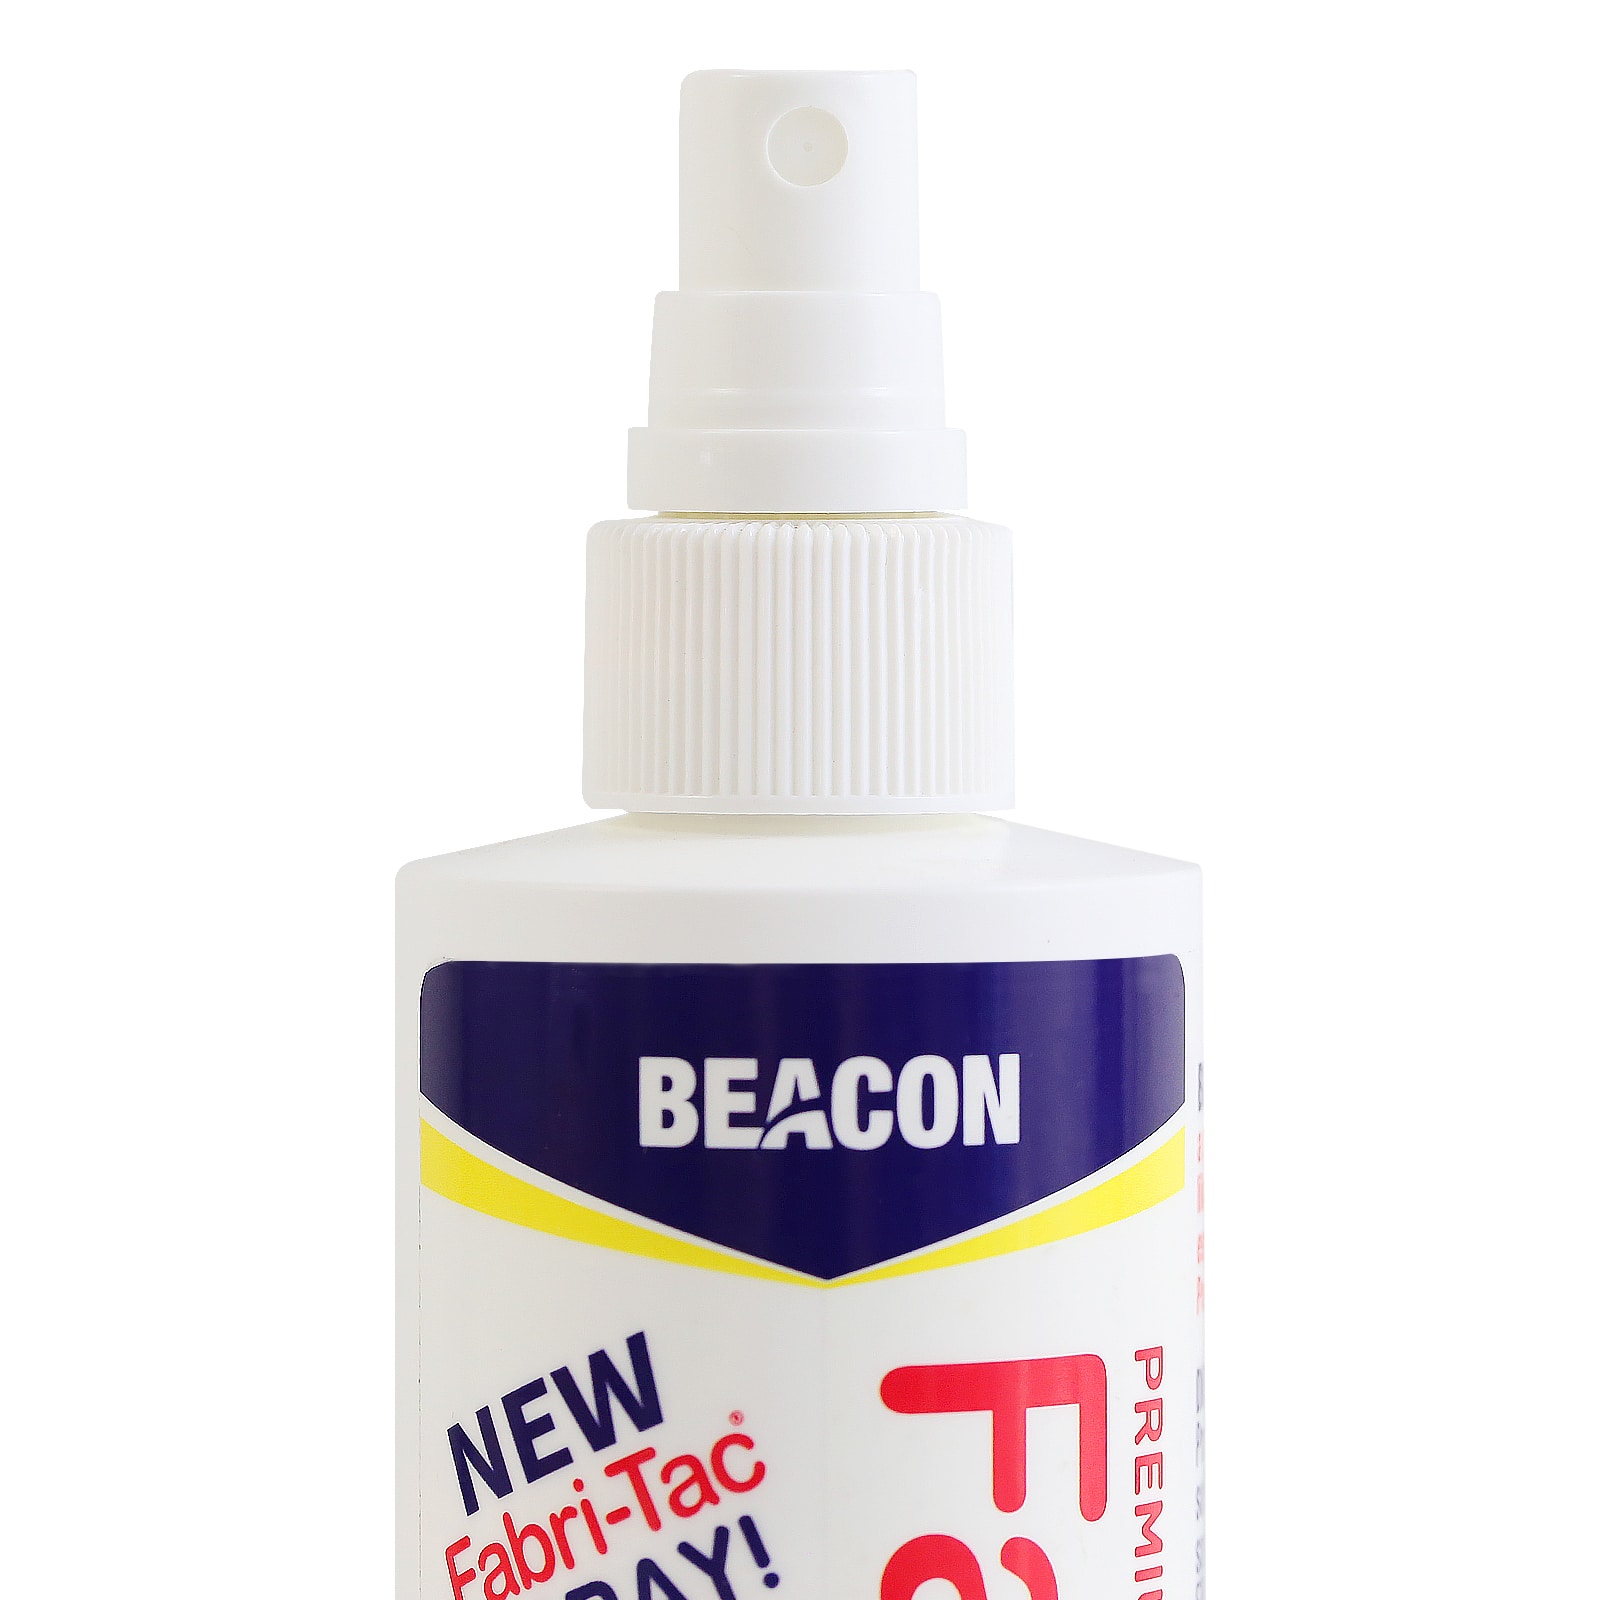 Beacon Liquid Fabric Adhesive 4 oz - Ace Hardware